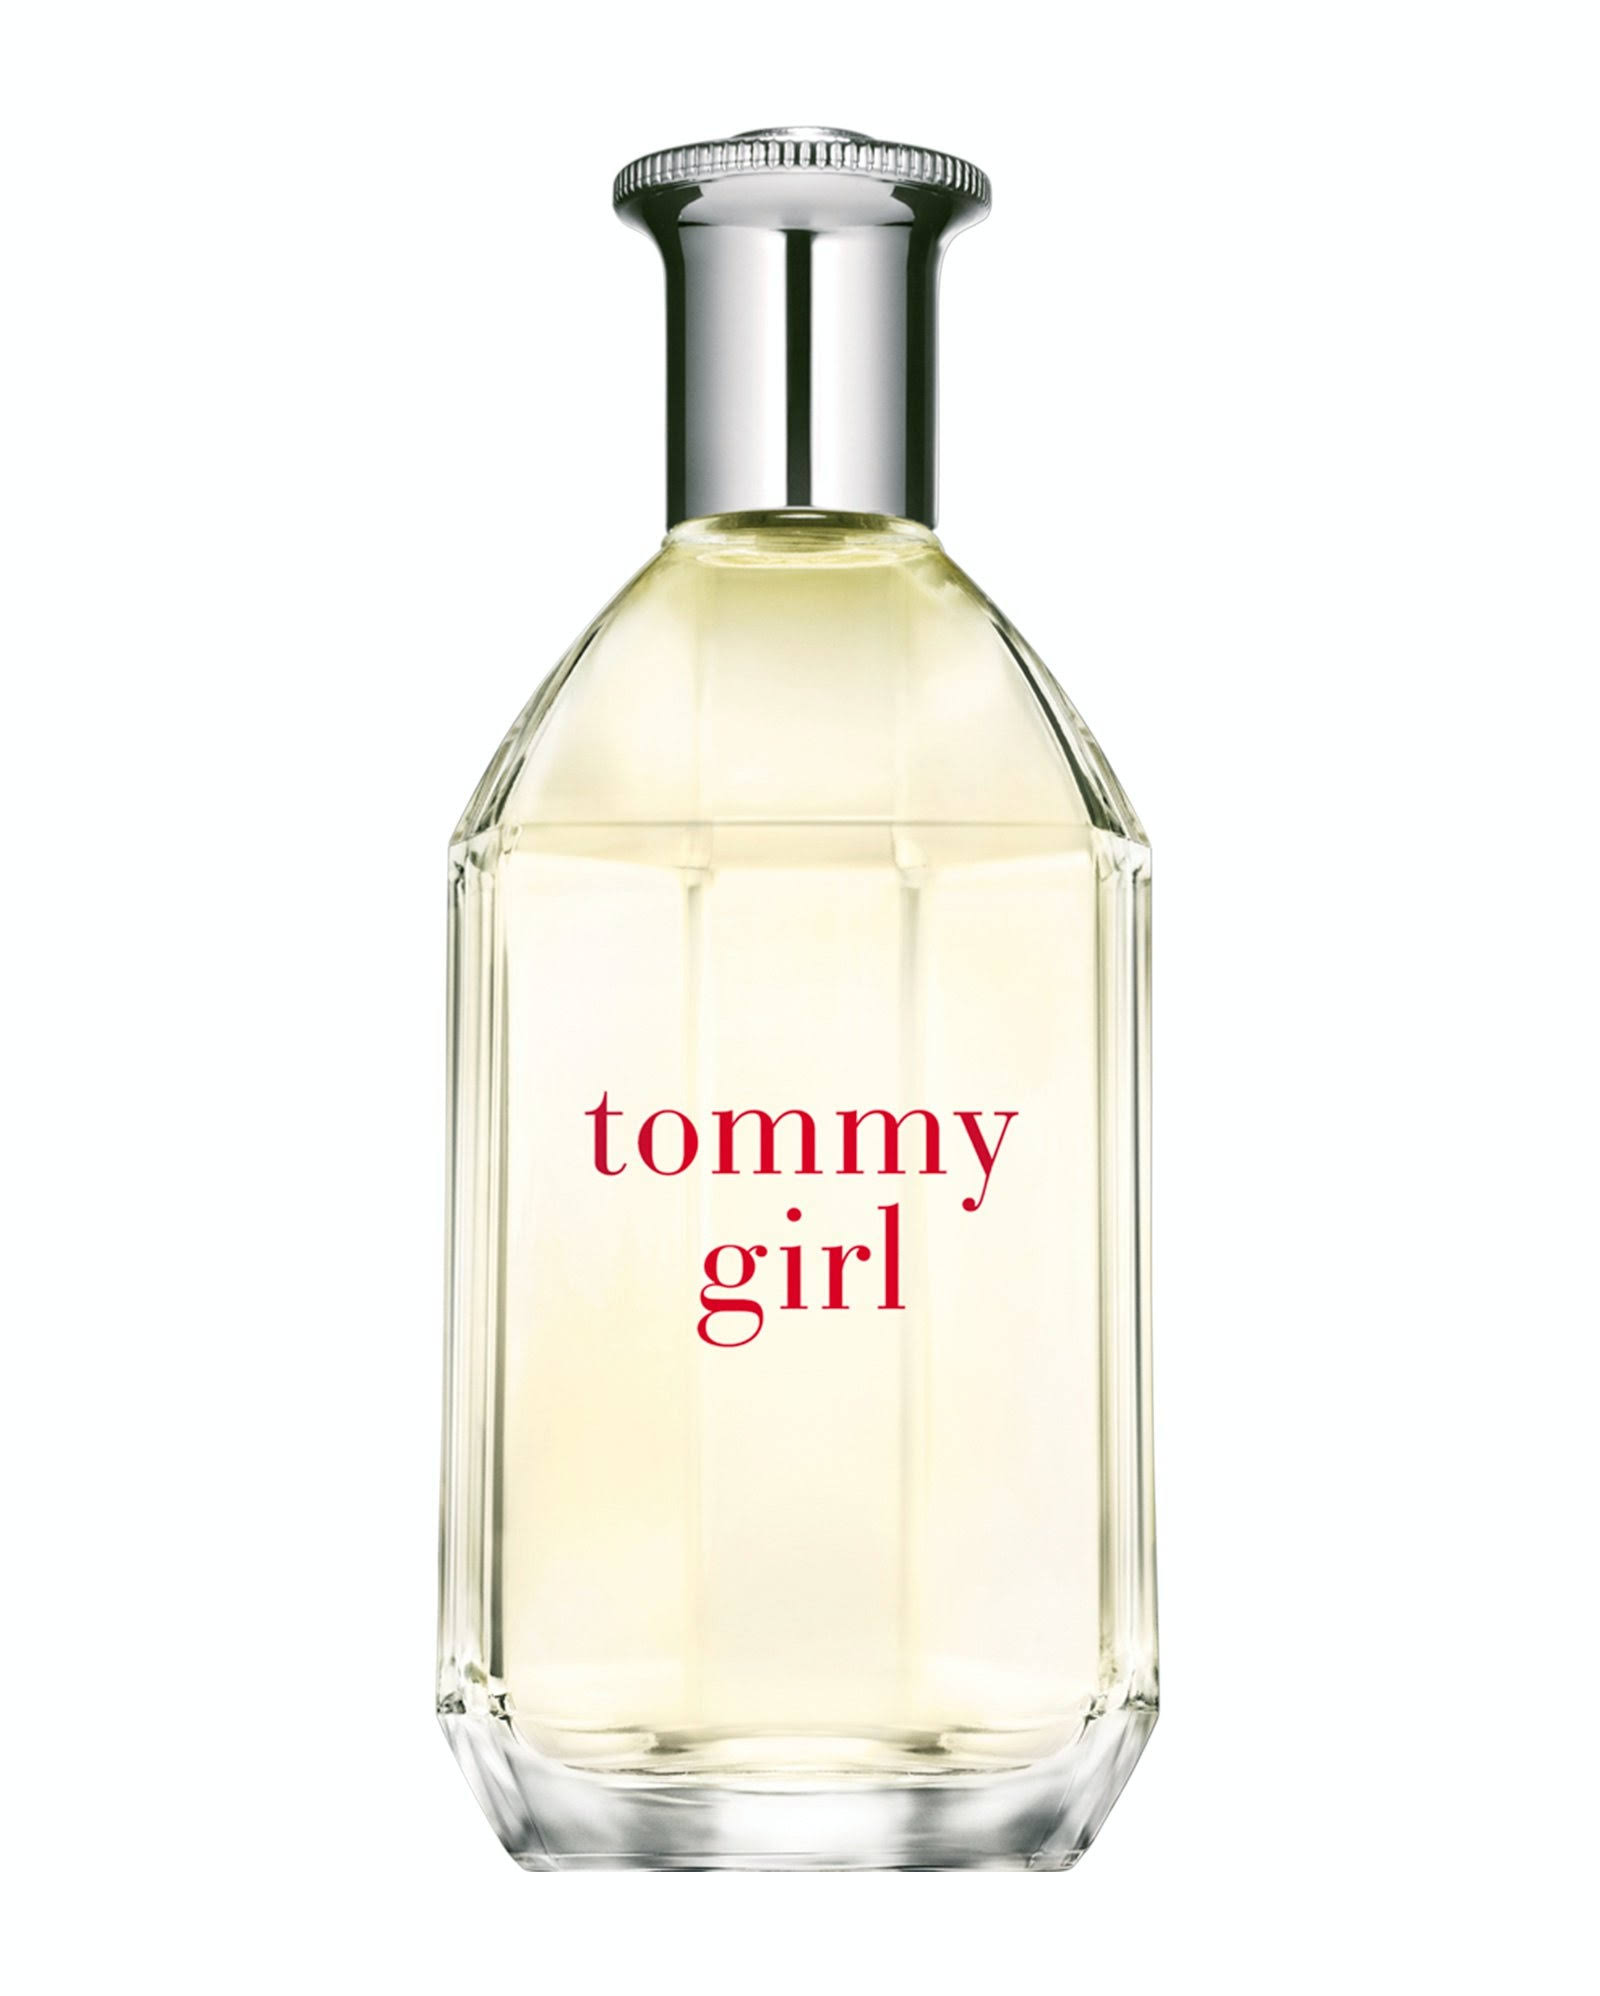 TOMMY GIRL by Tommy Hilfiger Eau De Toilette Spray 6.7 oz